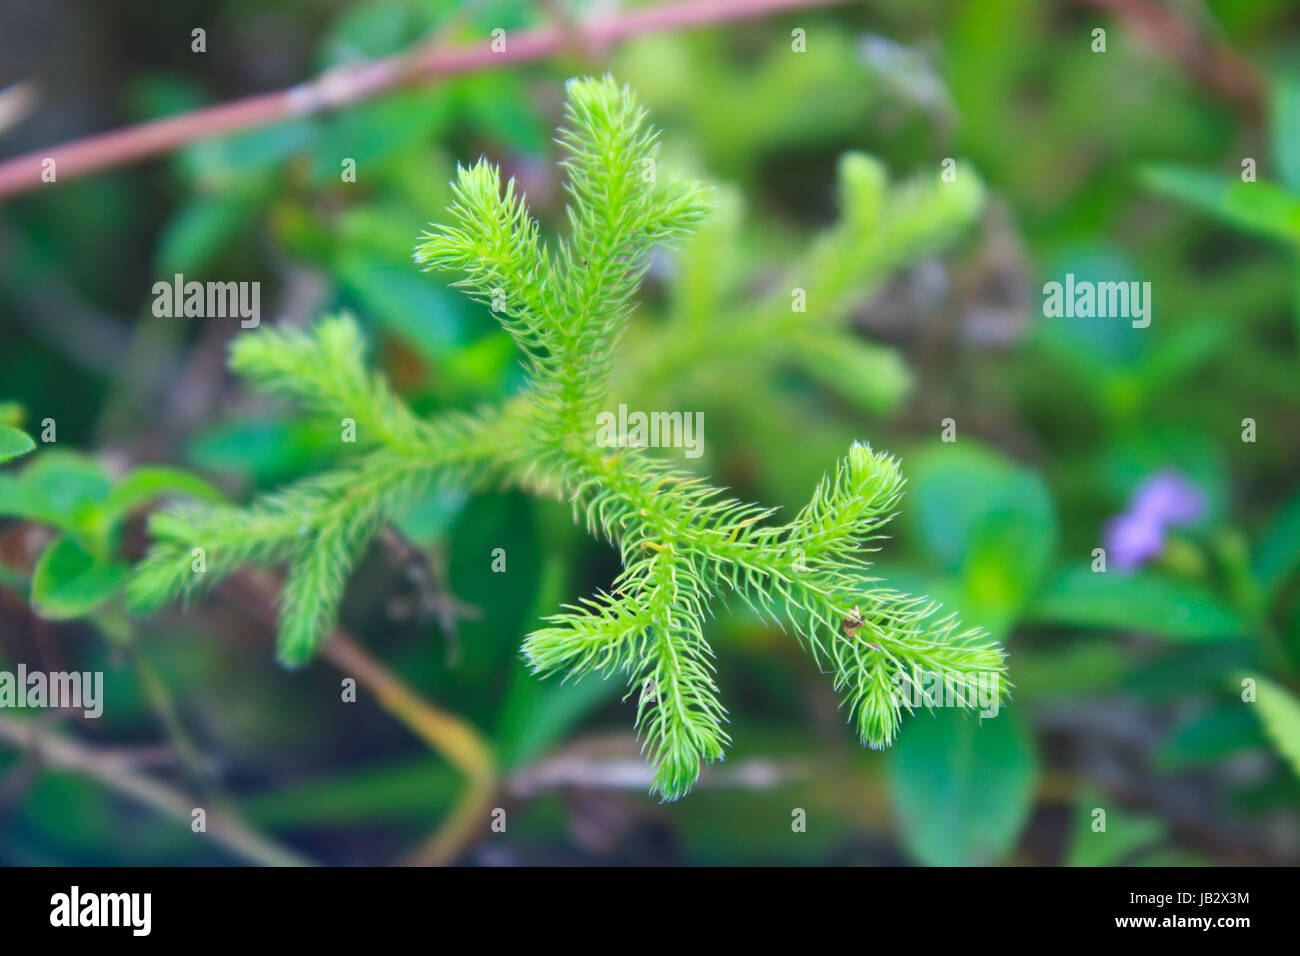 Lycopodium moss close-up (Lycopodium cernuum) in the forest Stock Photo